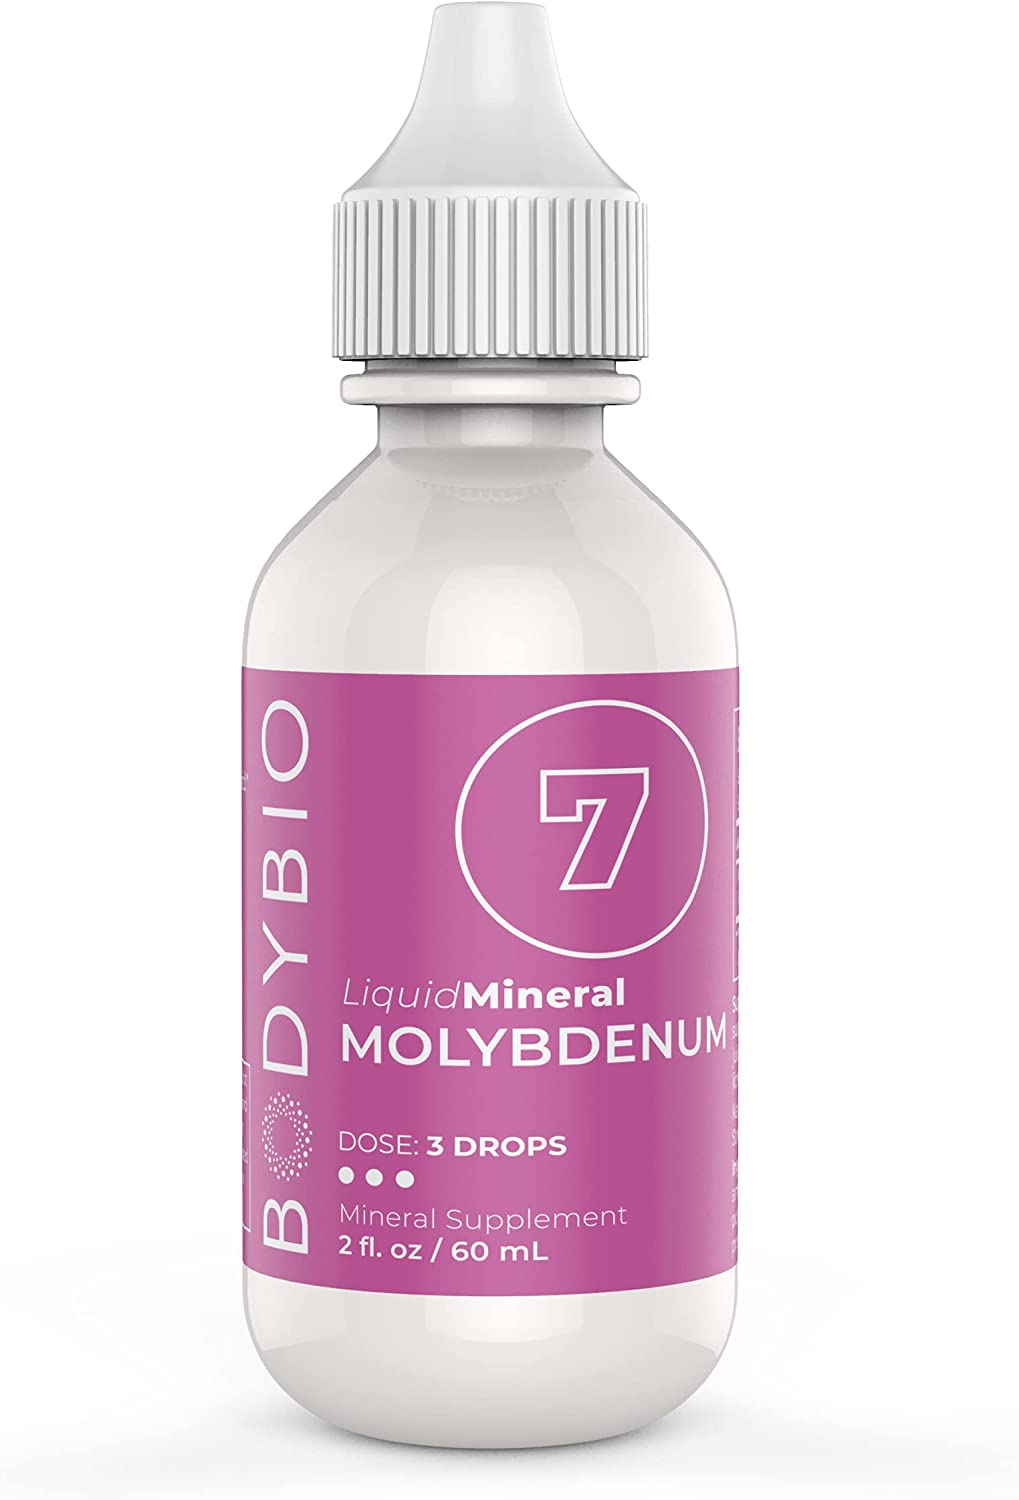 BodyBio Liquid Mineral Molybdenum - 60 ml